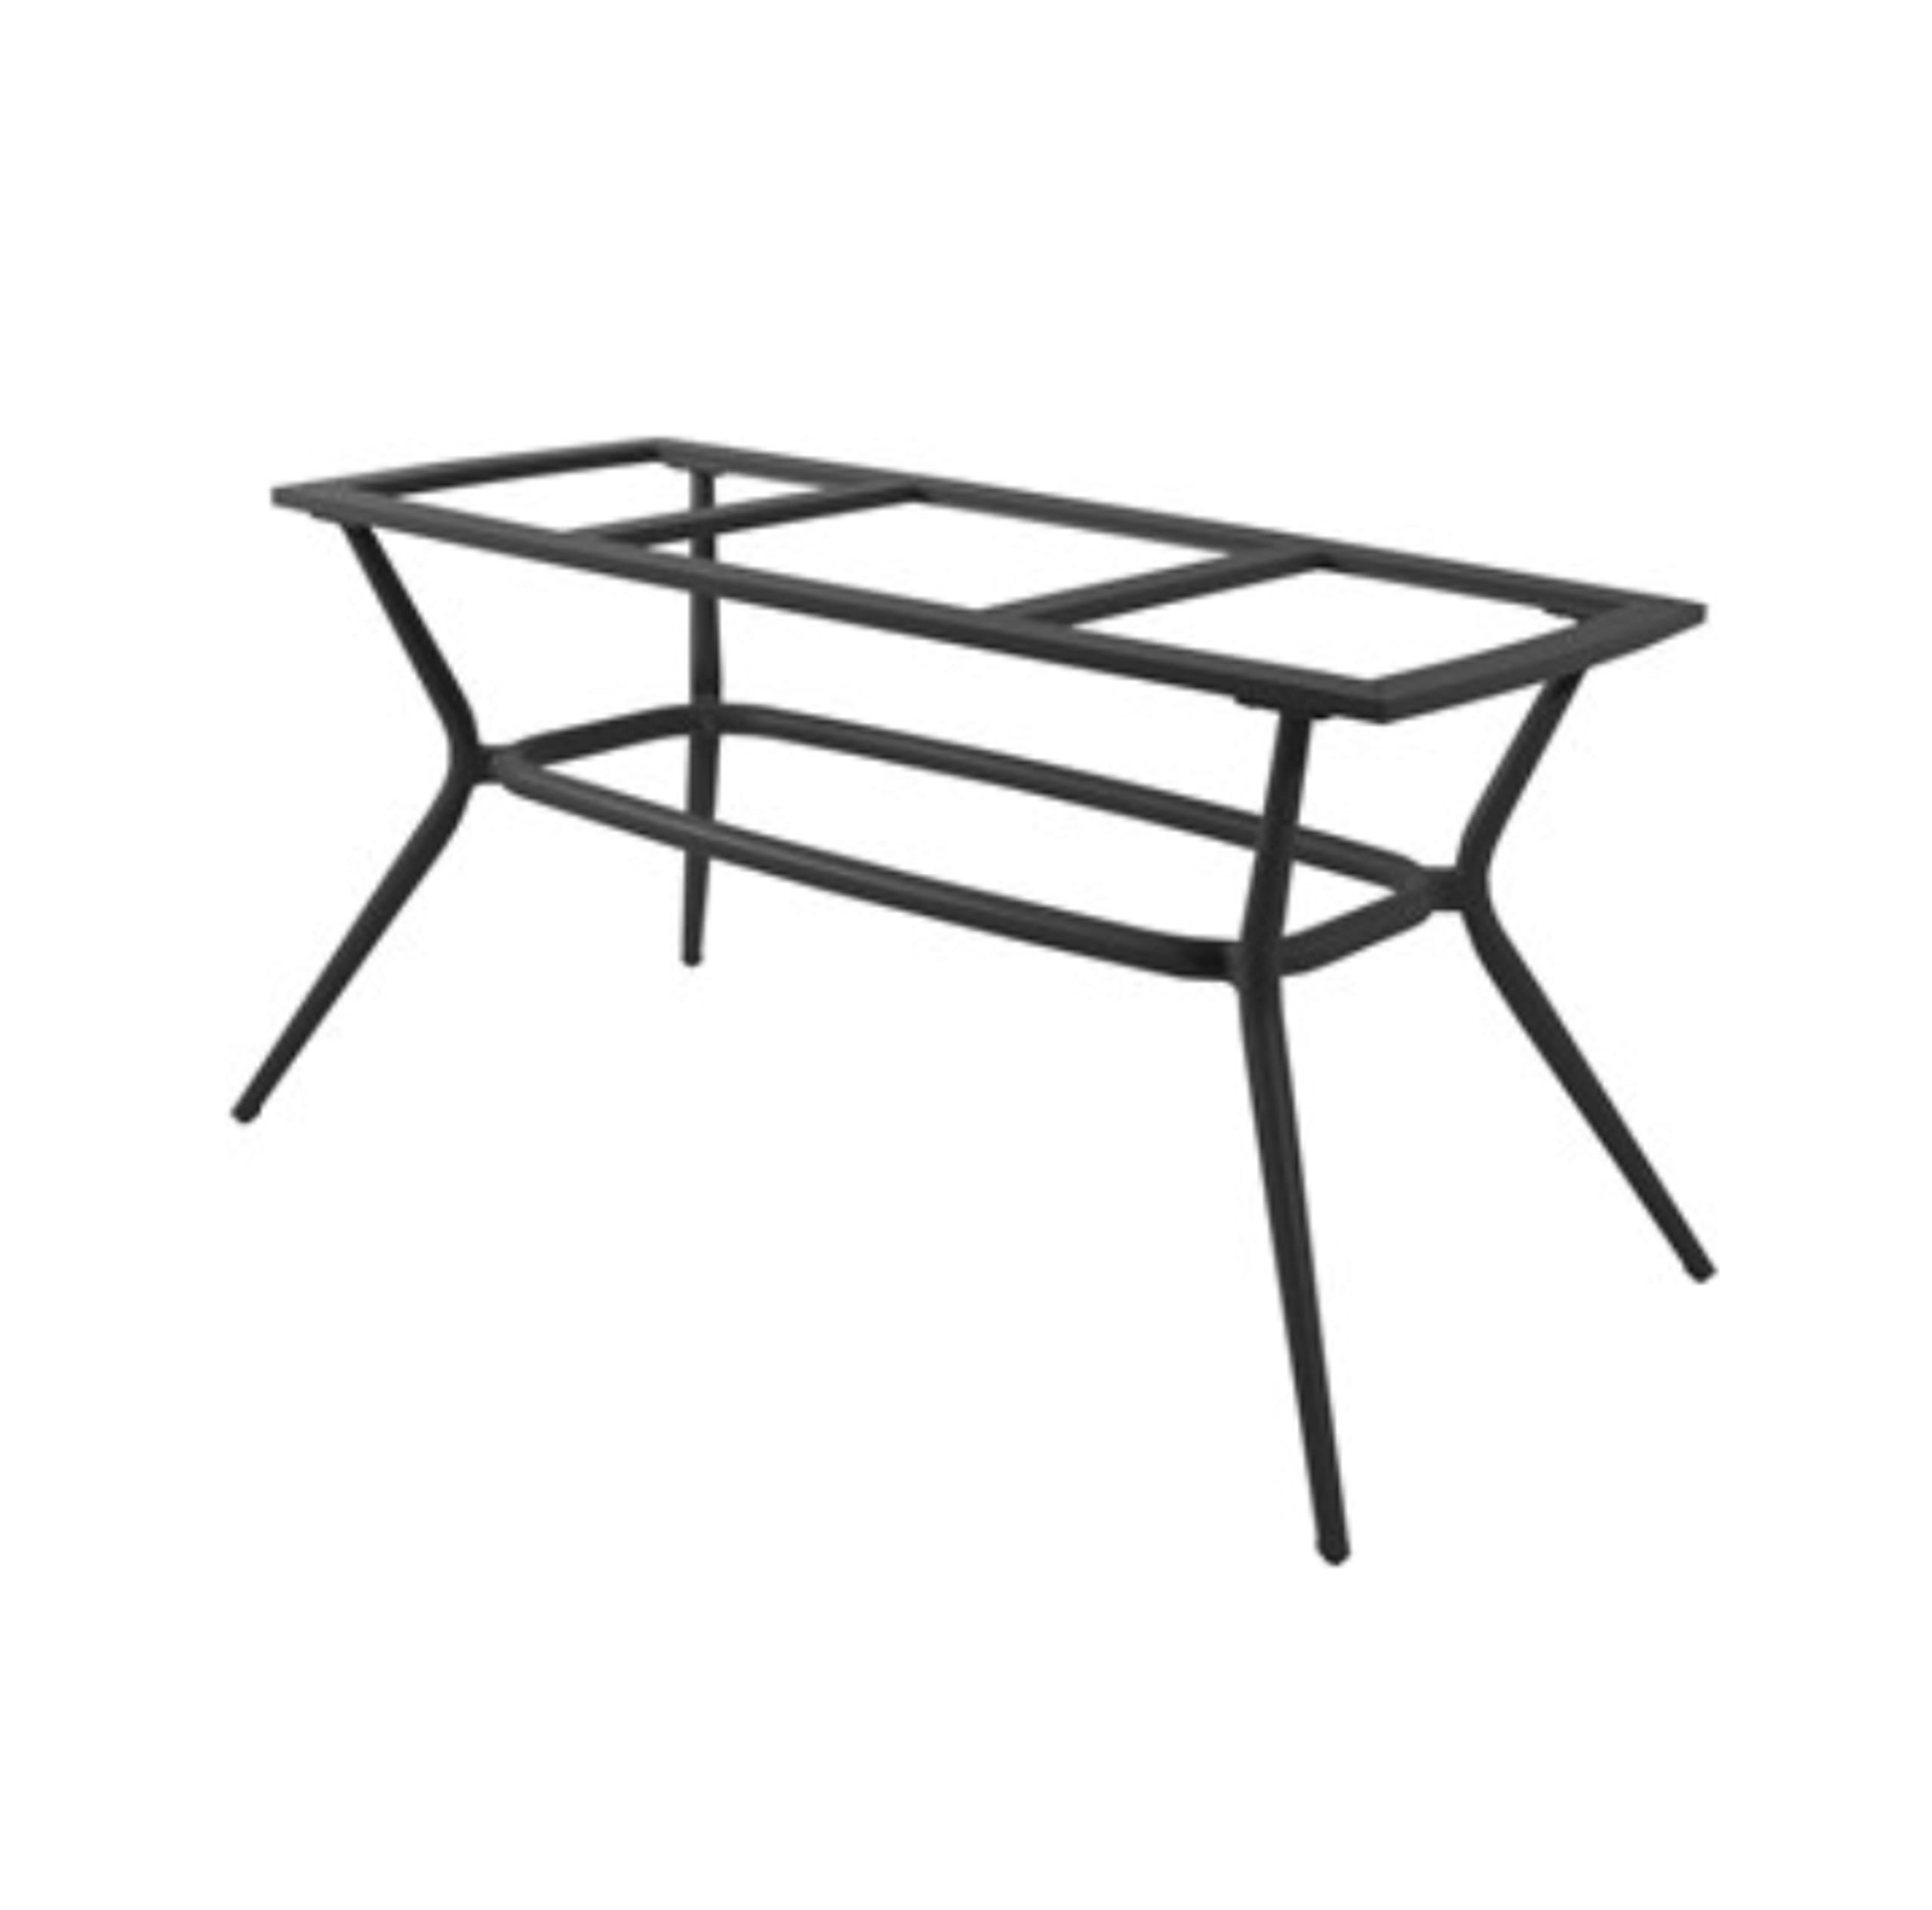 Cane-line - Dining Table - Joy Spisebordunderstel - Oval - Lava Grey, Aluminium